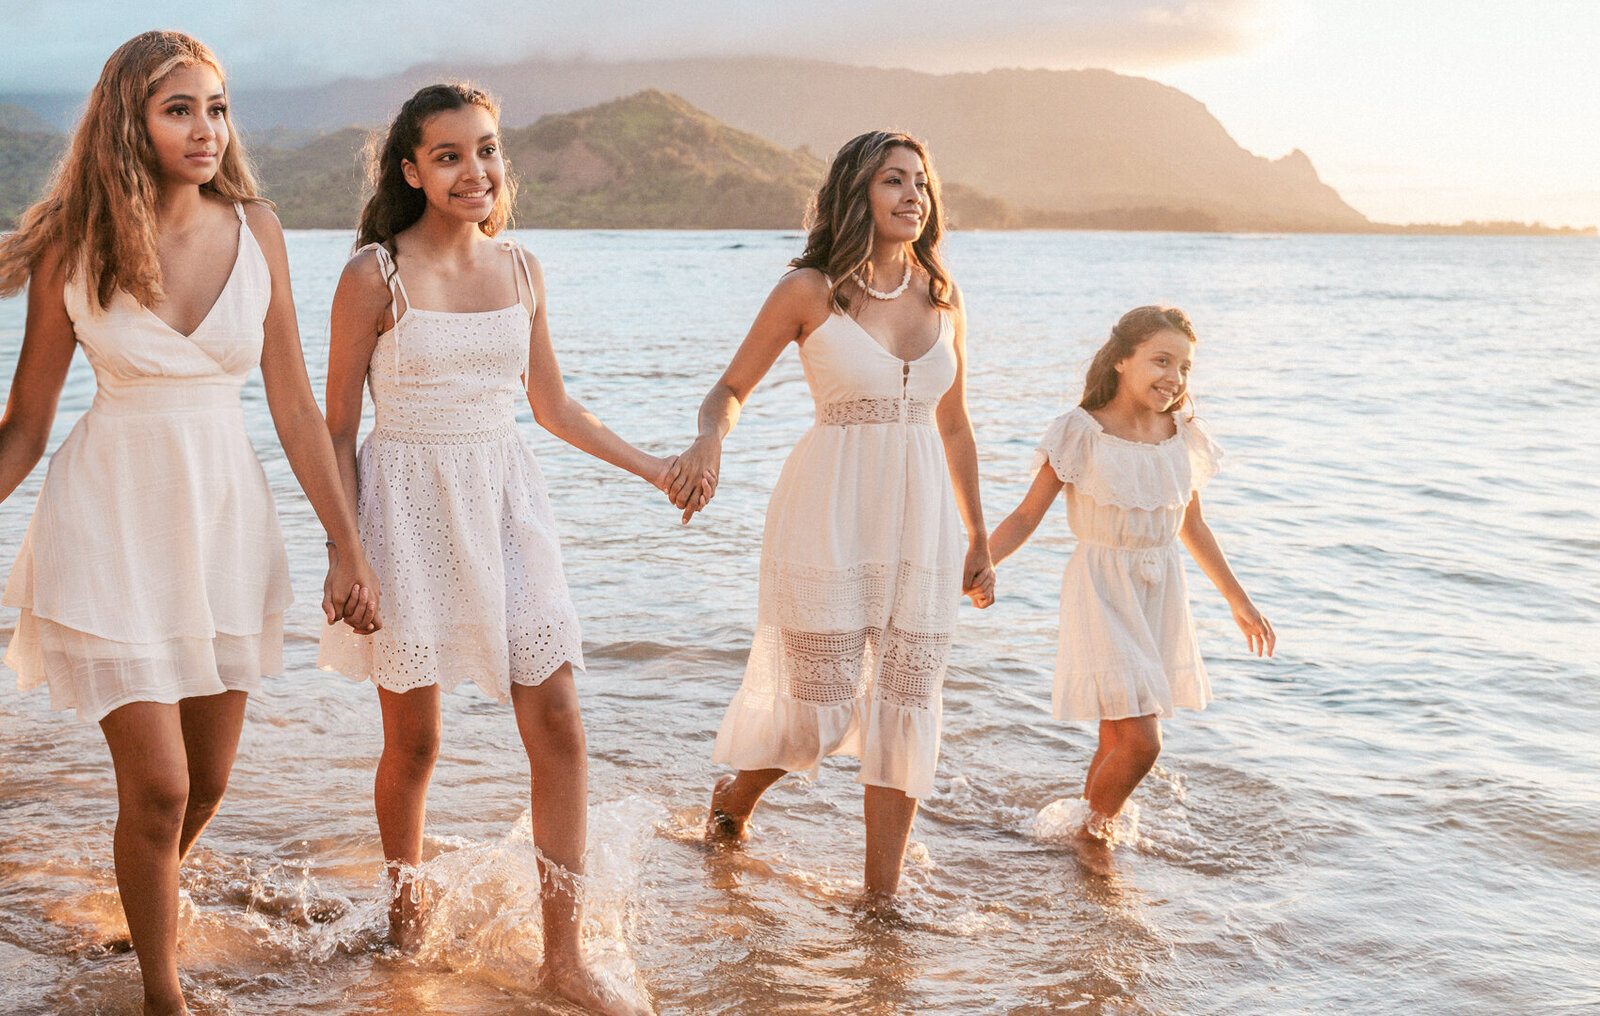 Family portraits photographers in Kauai